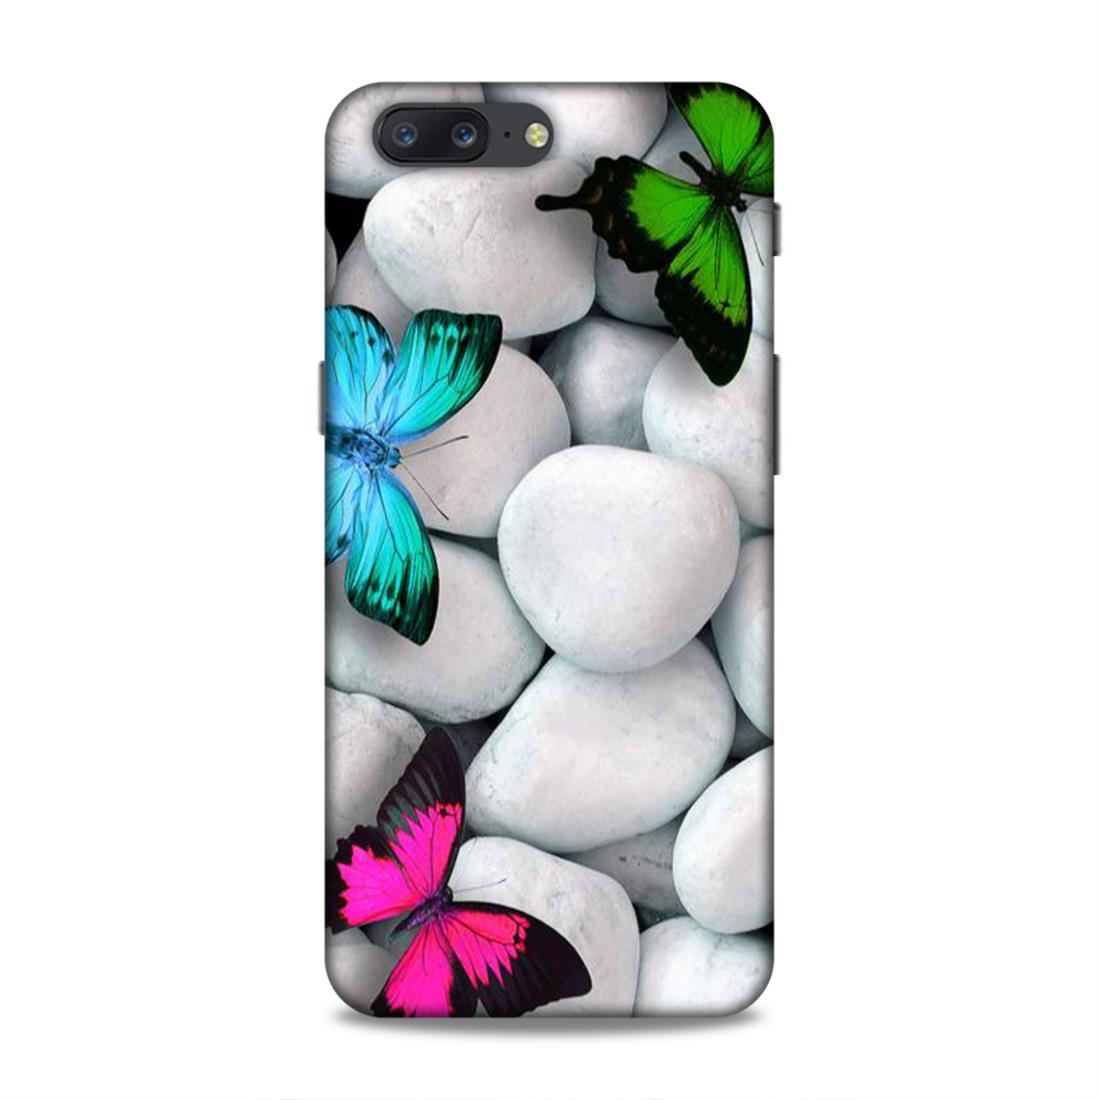 White Stone OnePlus 5 Phone Case Cover